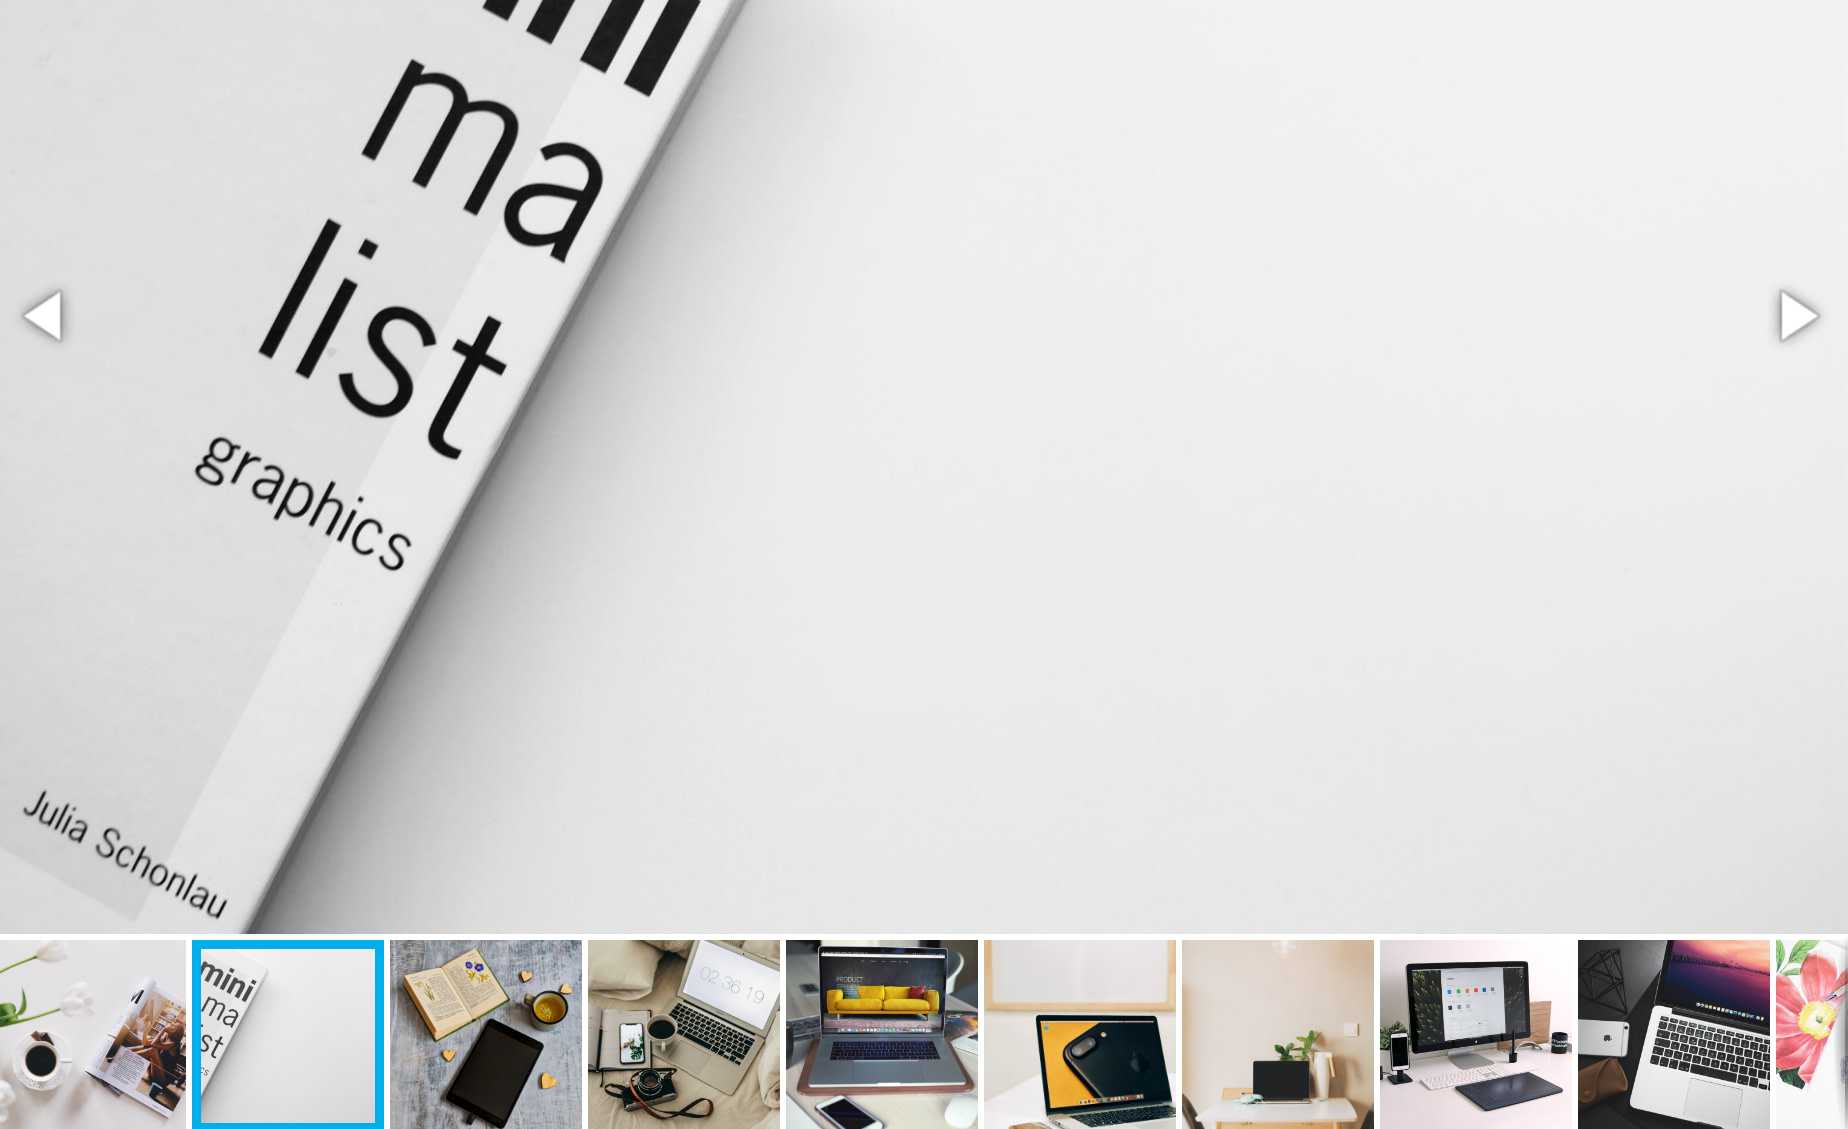 Wordpress Slideshow: An image slider with too many items.